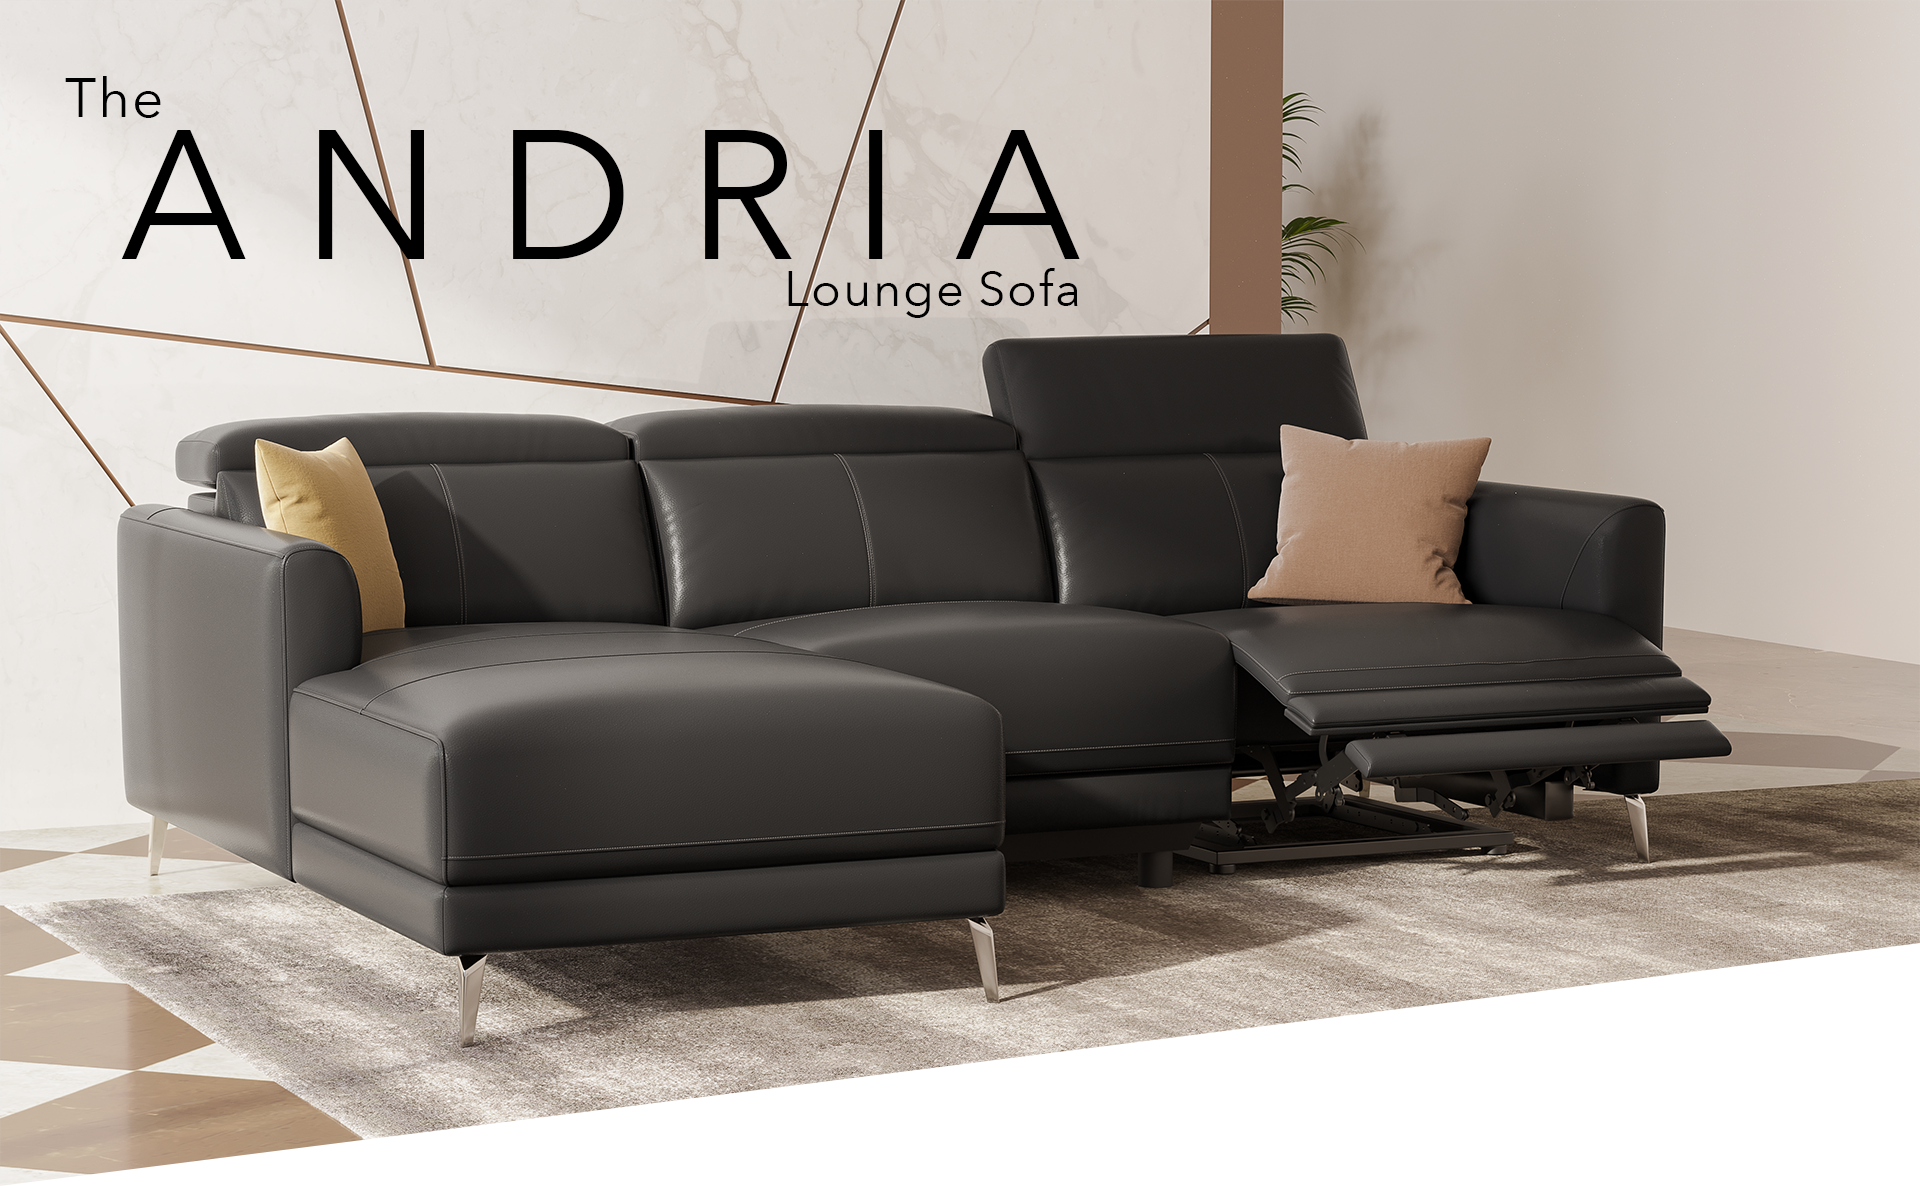 The Andria Lounge Sofa